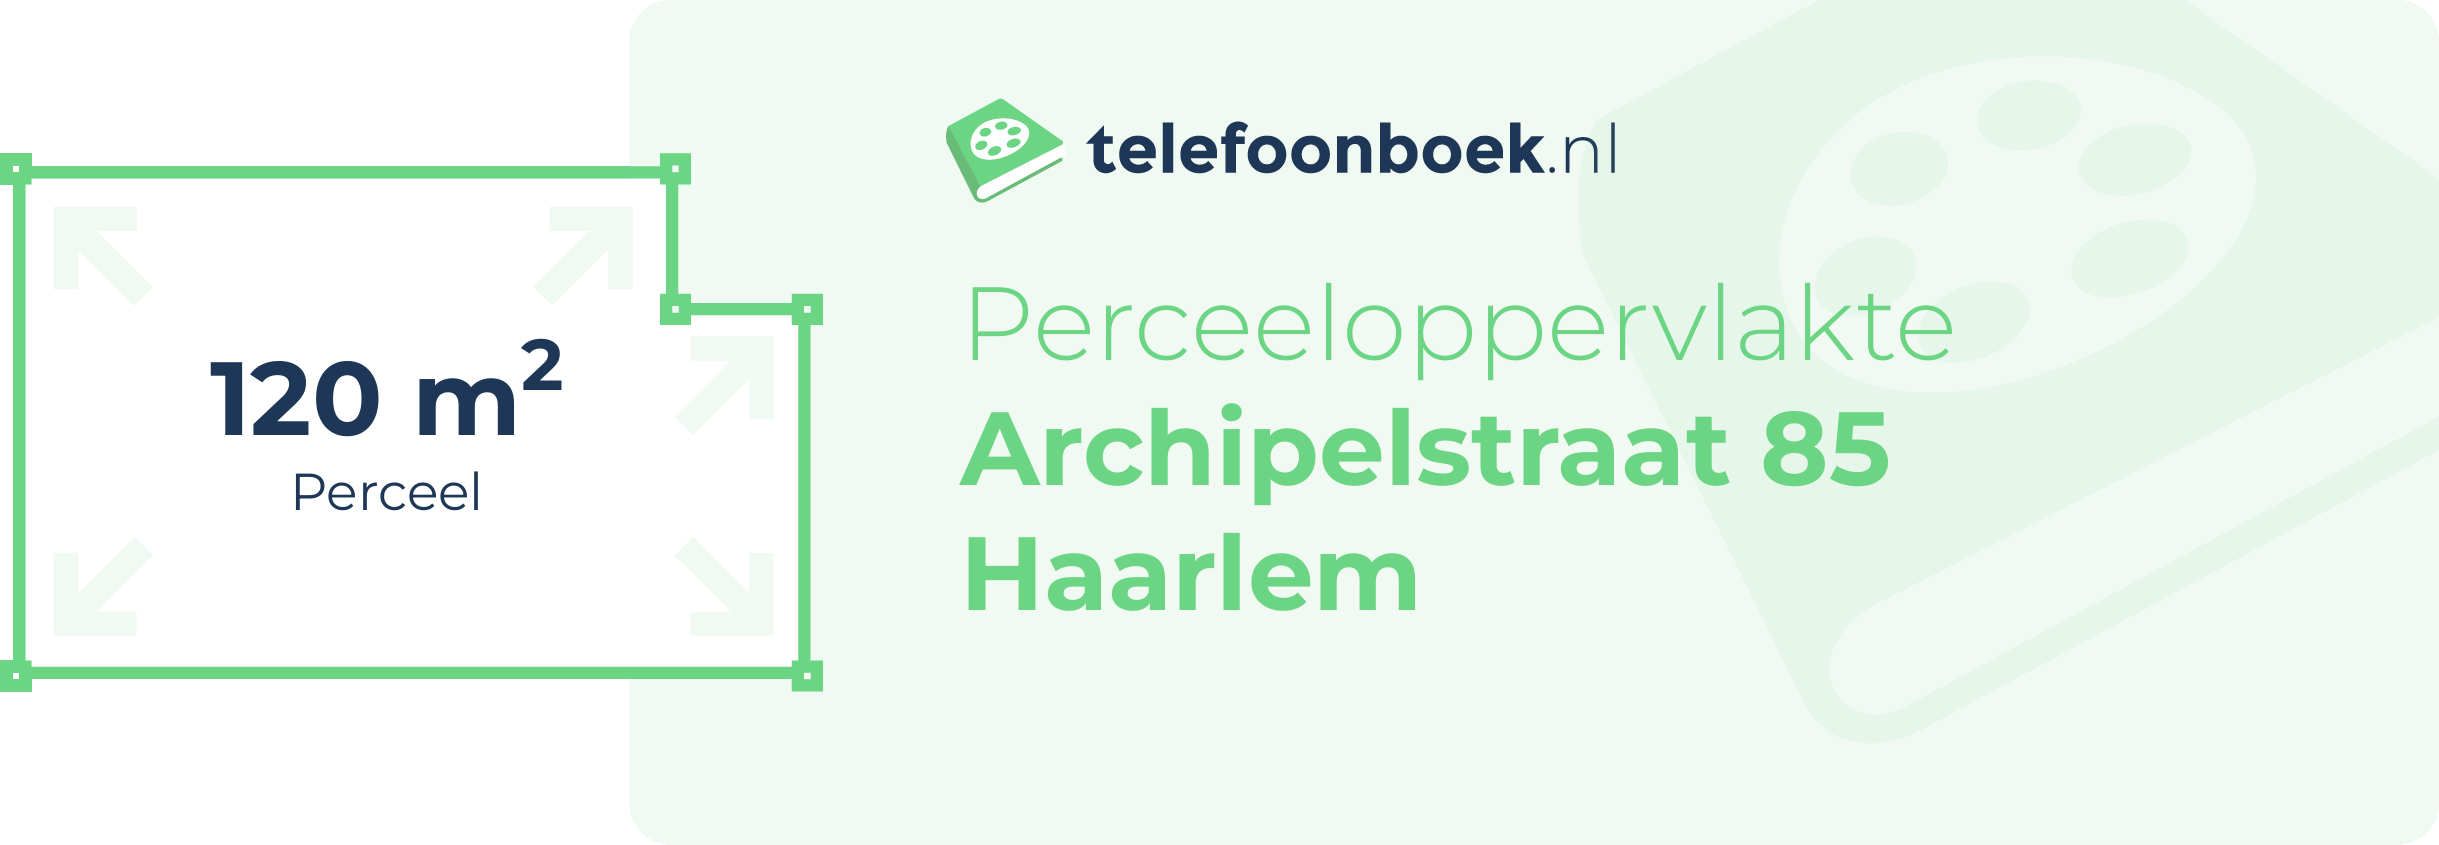 Perceeloppervlakte Archipelstraat 85 Haarlem